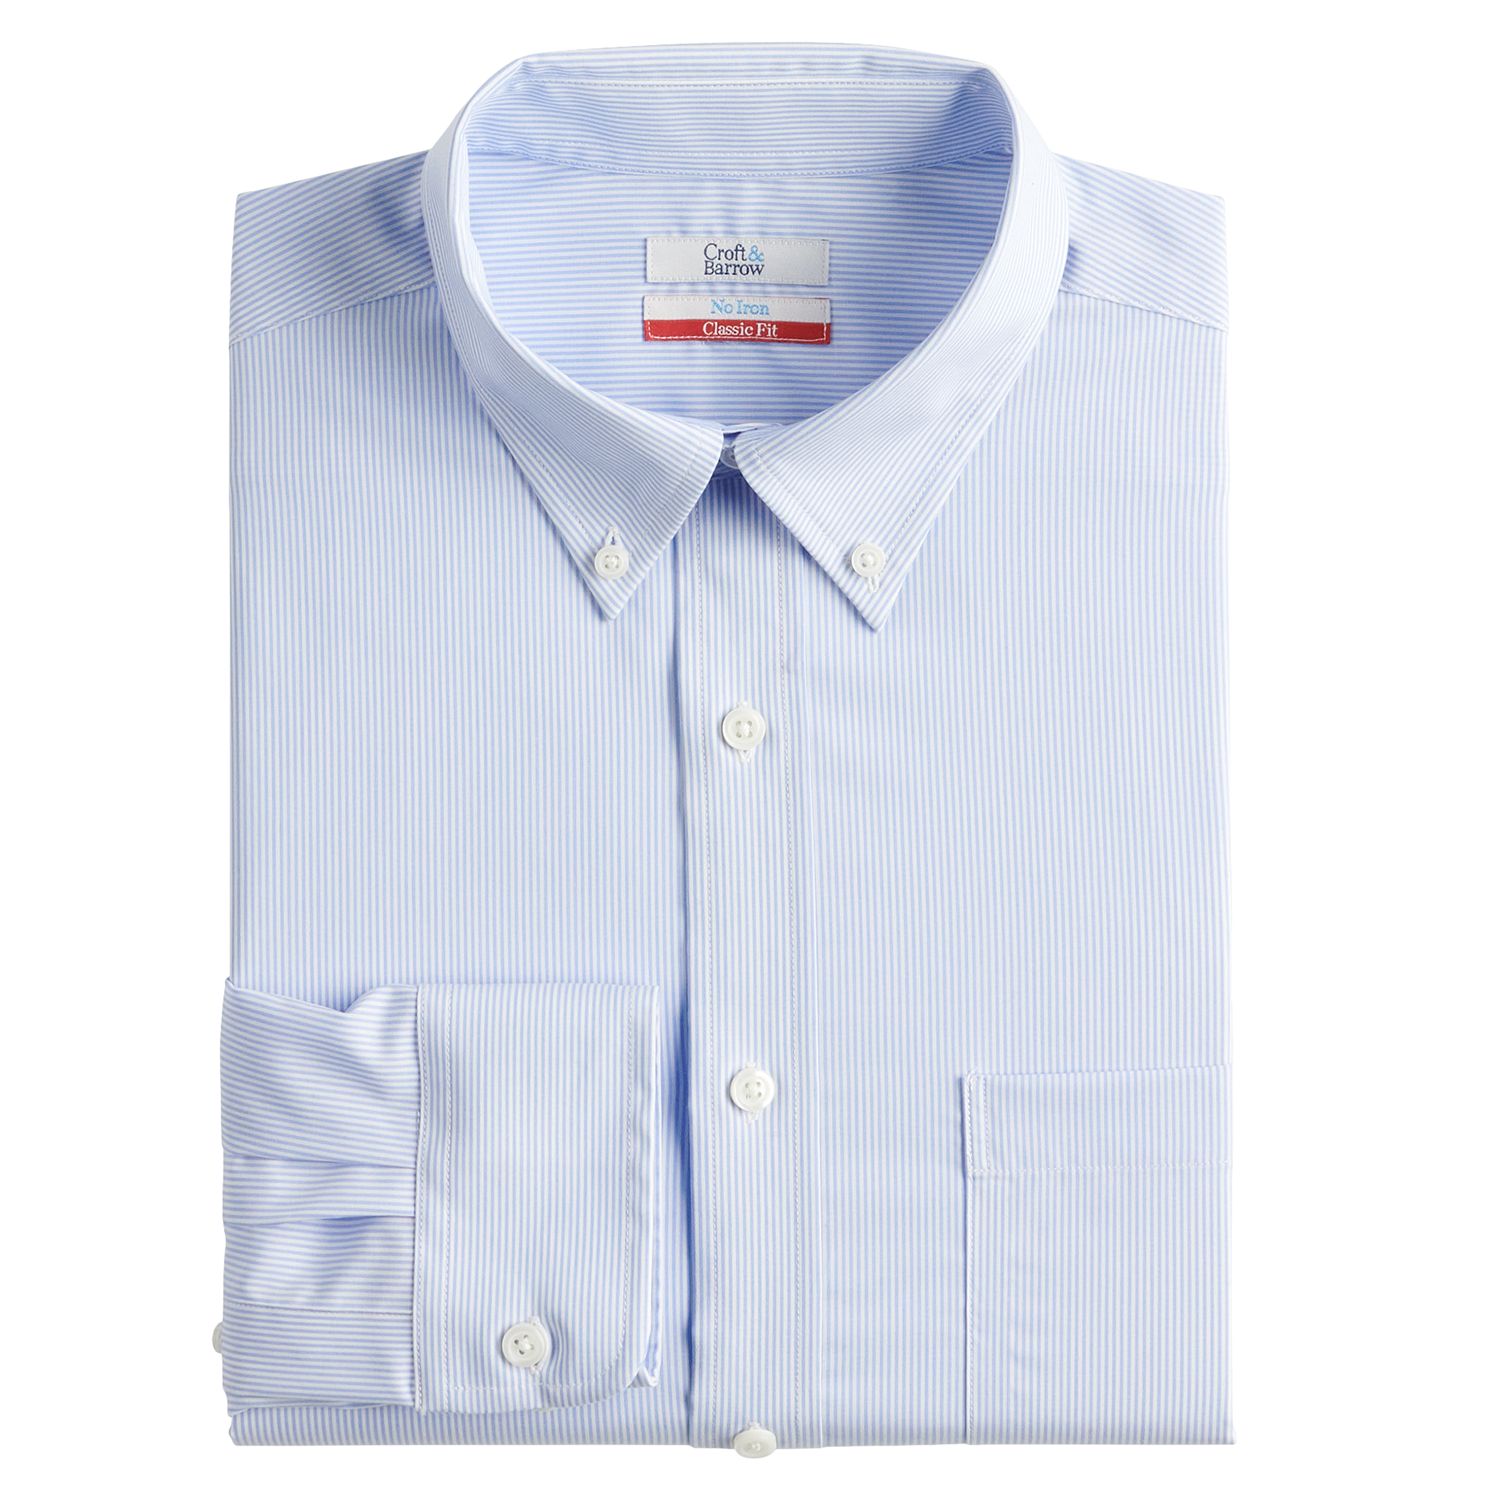 No-Iron Button-Down Collar Dress Shirt